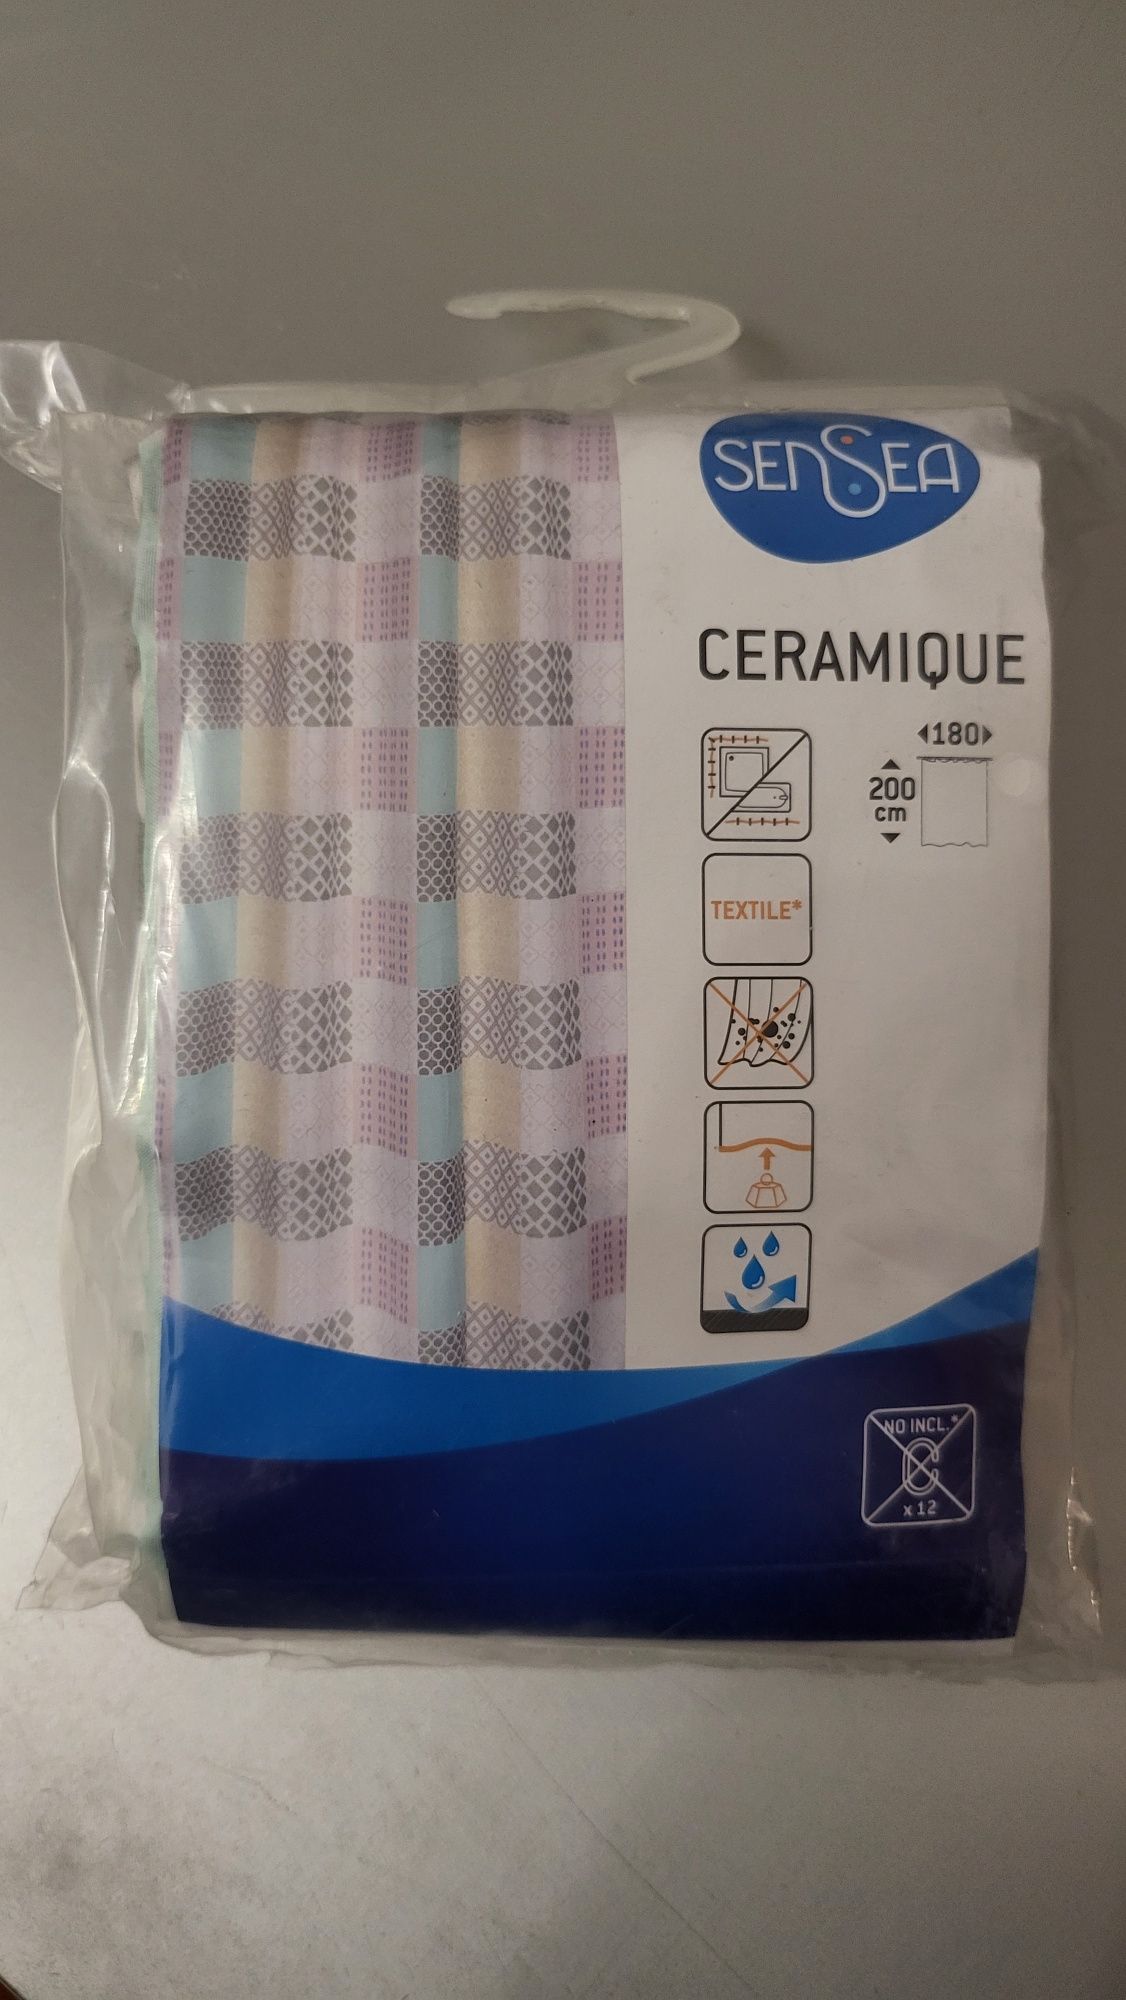 Cortina de duche SENSEA Ceramique